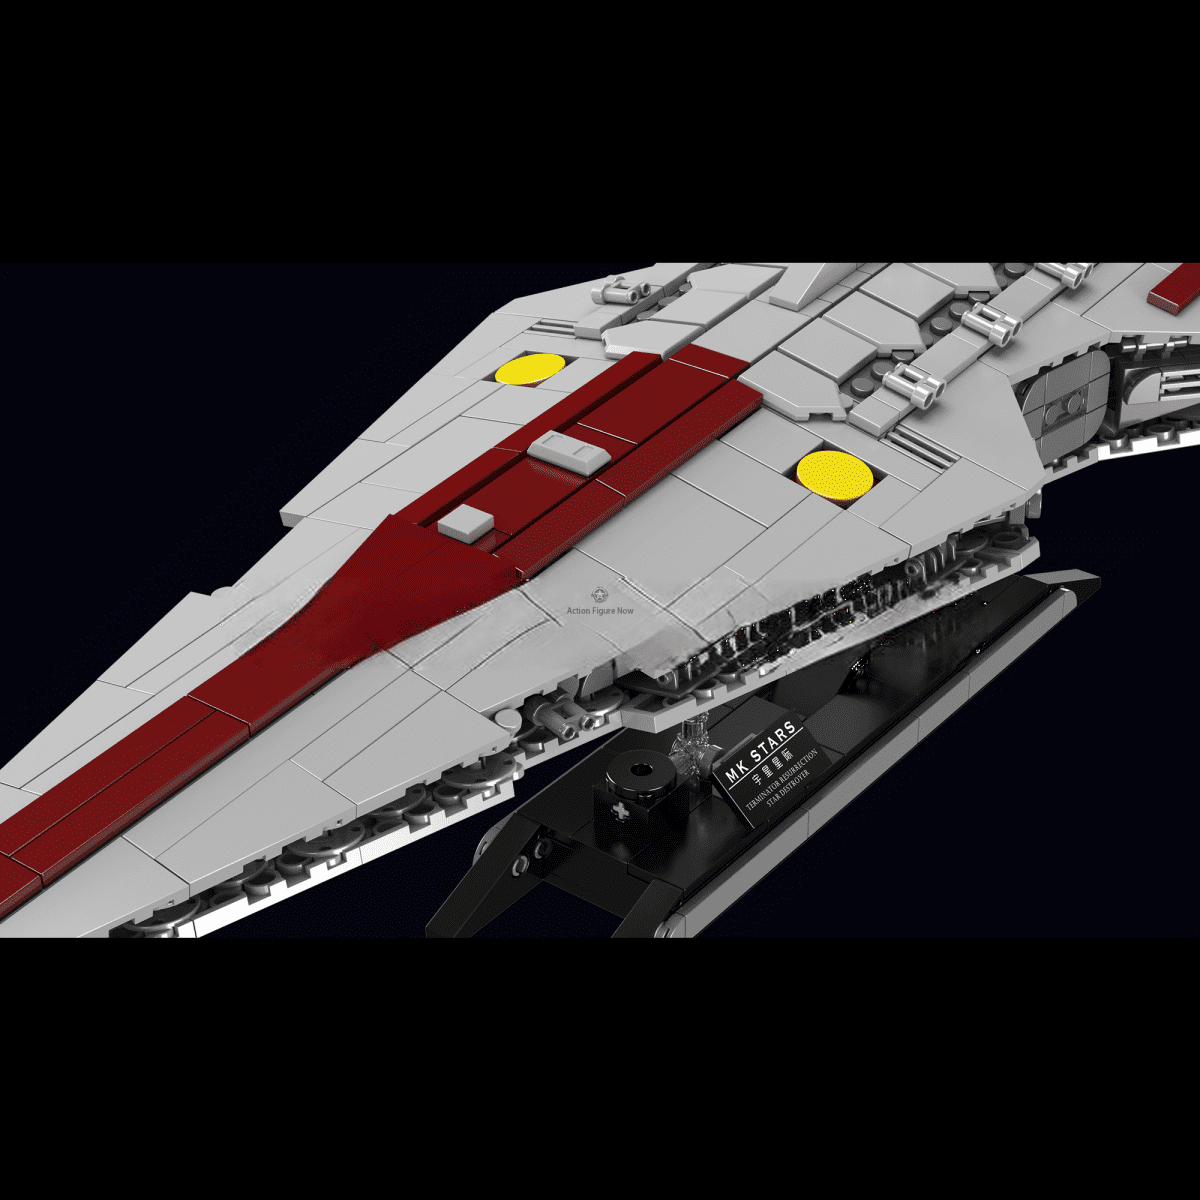 ActionFigureNow 21074 Space Wars - Republic Attack Cruiser Building Blocks Set | 1320 Pieces Kit